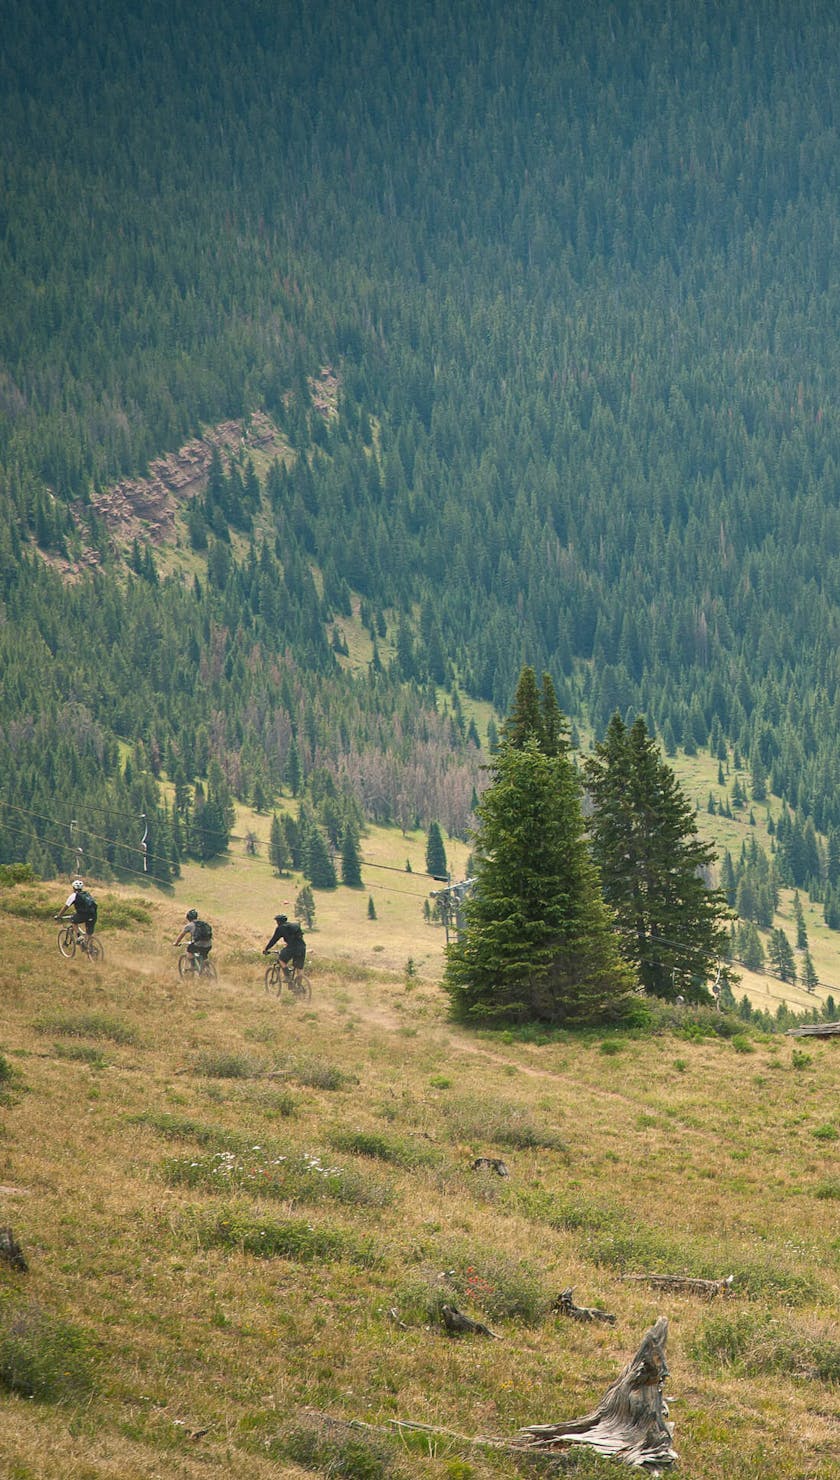 Riders descending into a valley